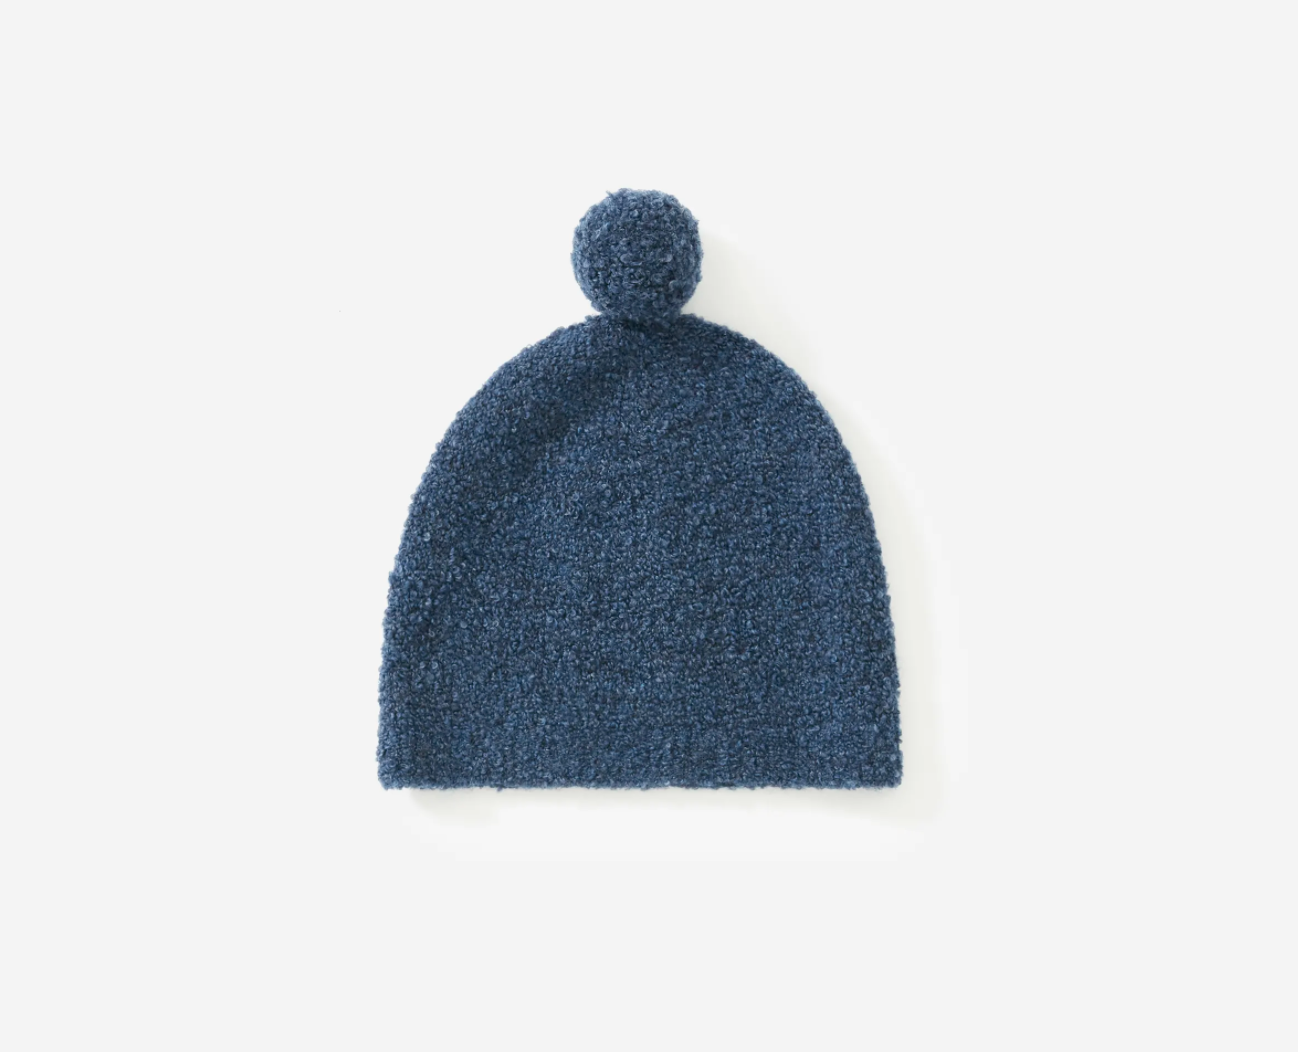 everlane winter hat, cute winter hats